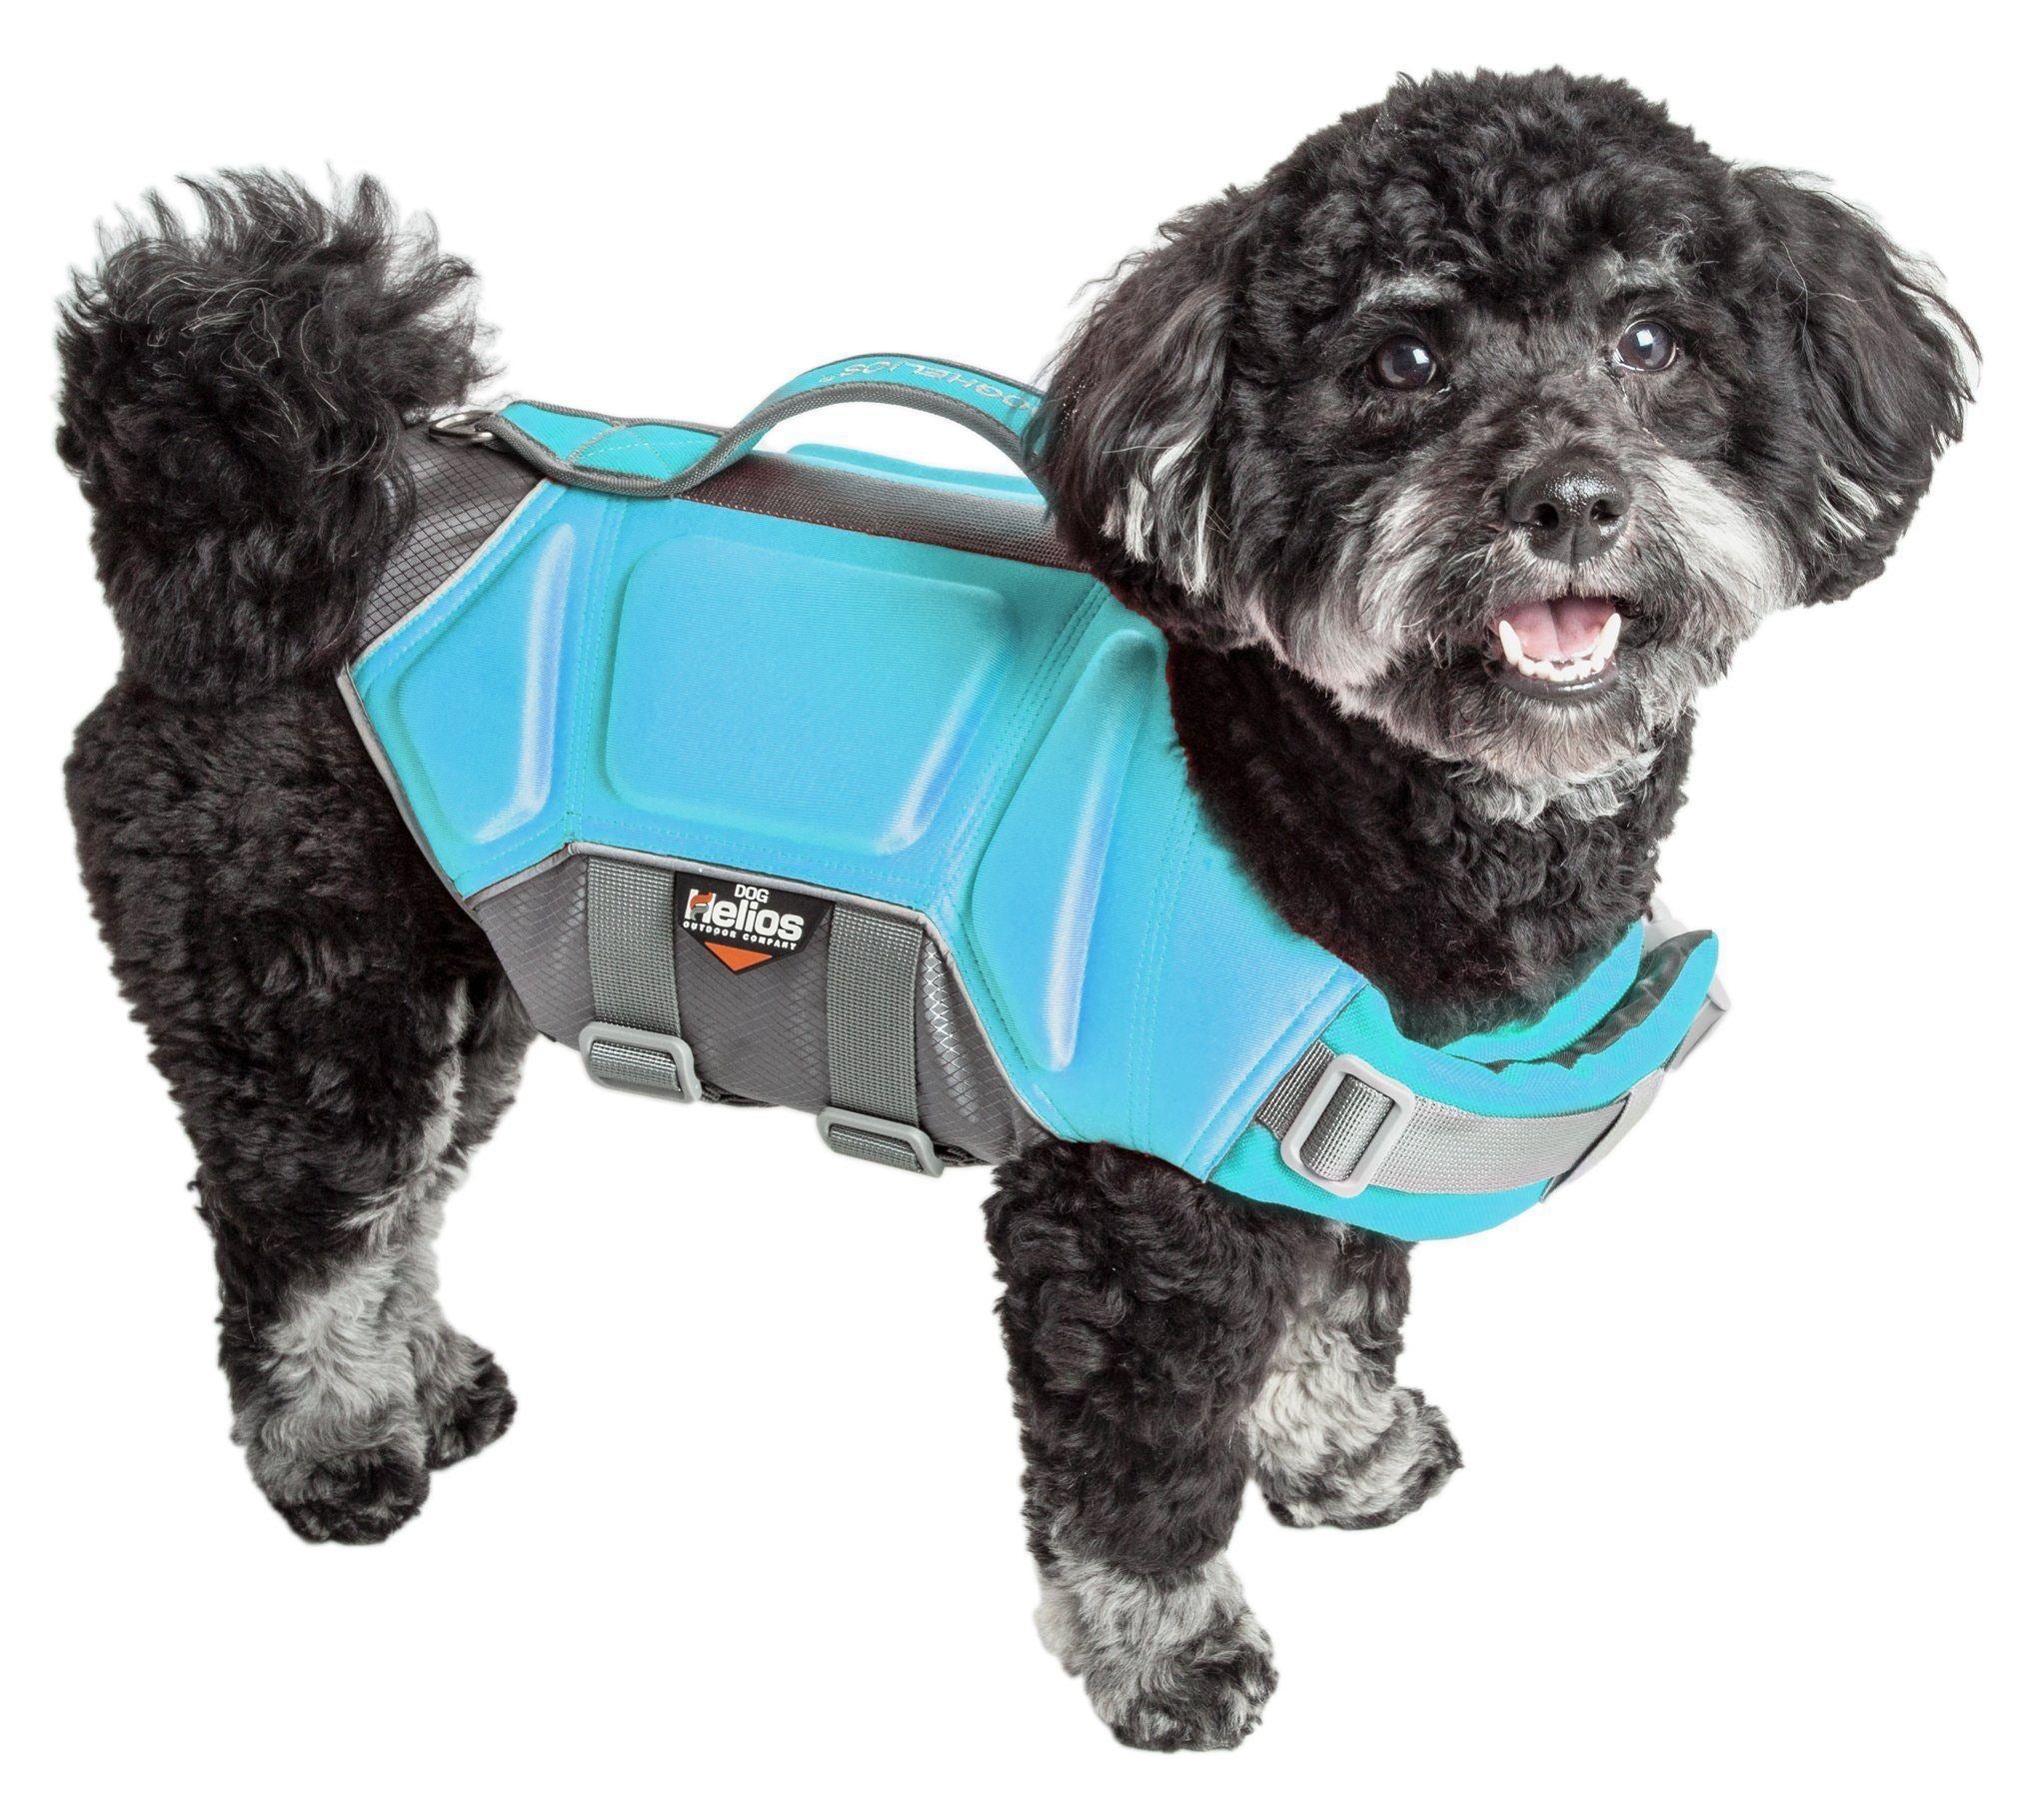 Dog Helios ® 'Tidal Guard' Multi-Point Strategically-Stitched Reflective Pet Dog Life Jacket Vest Small Light Blue